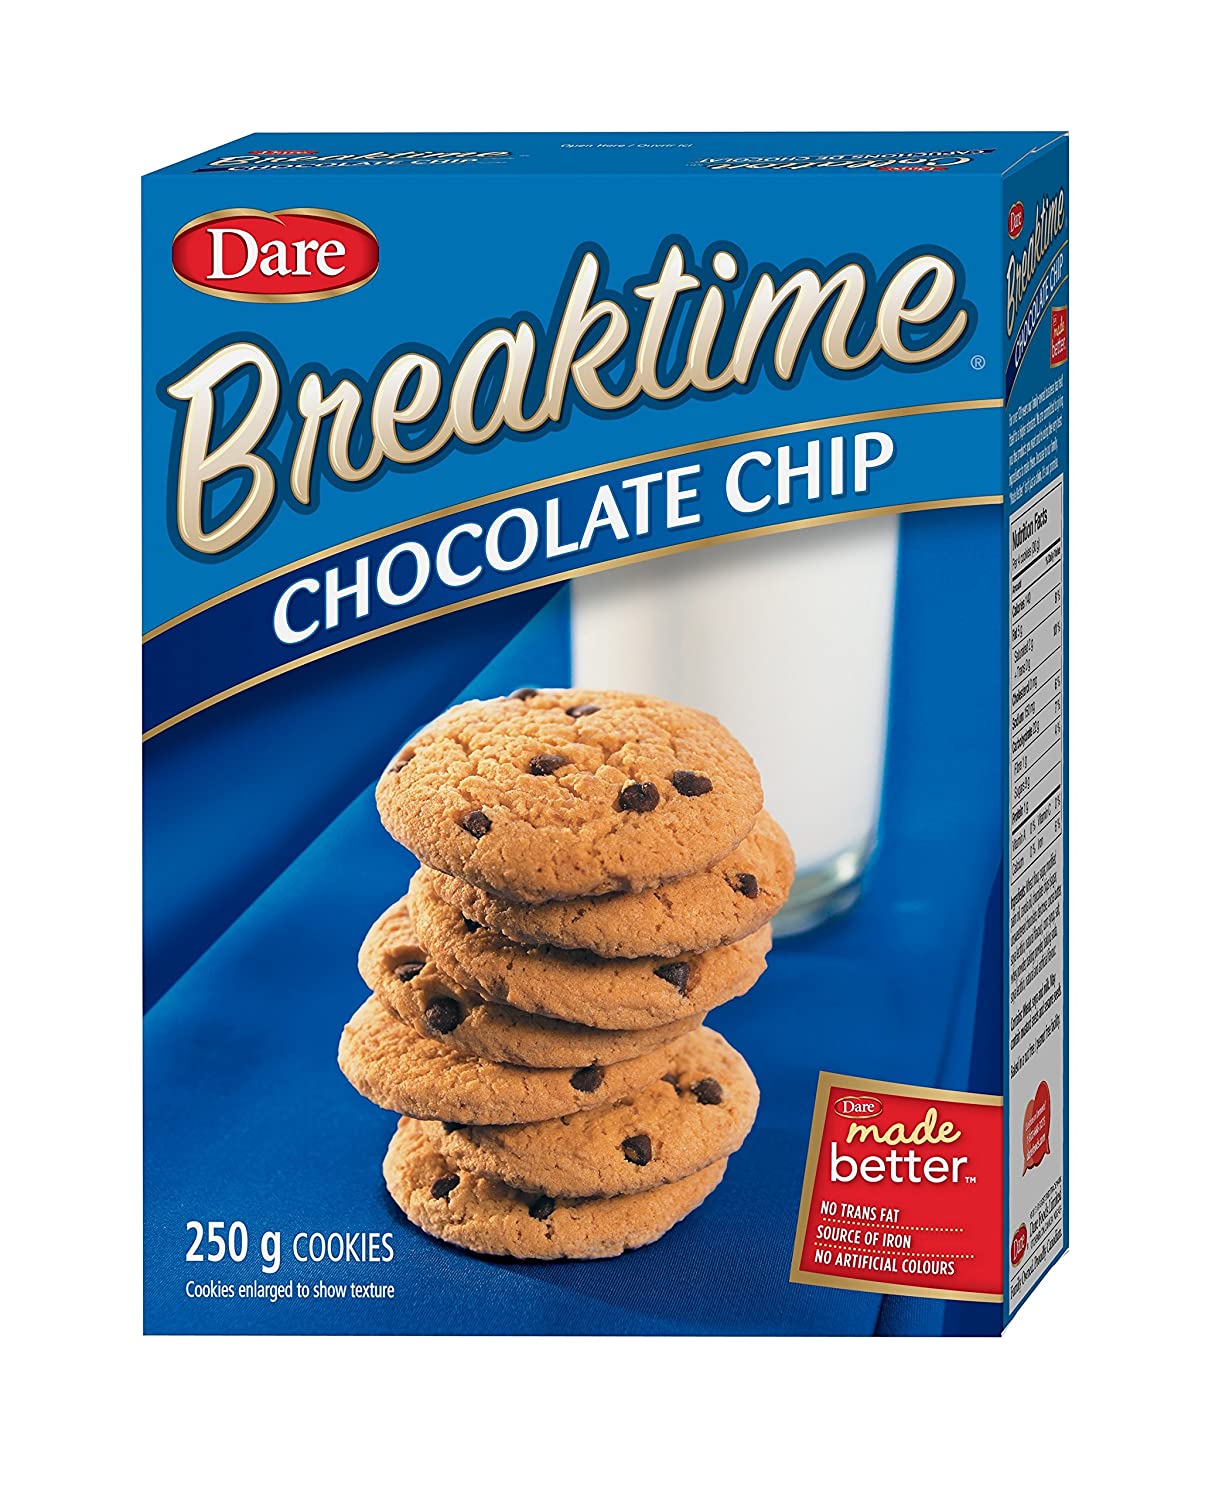 stl>Breaktime Chocolate Chip Cookies - 250g